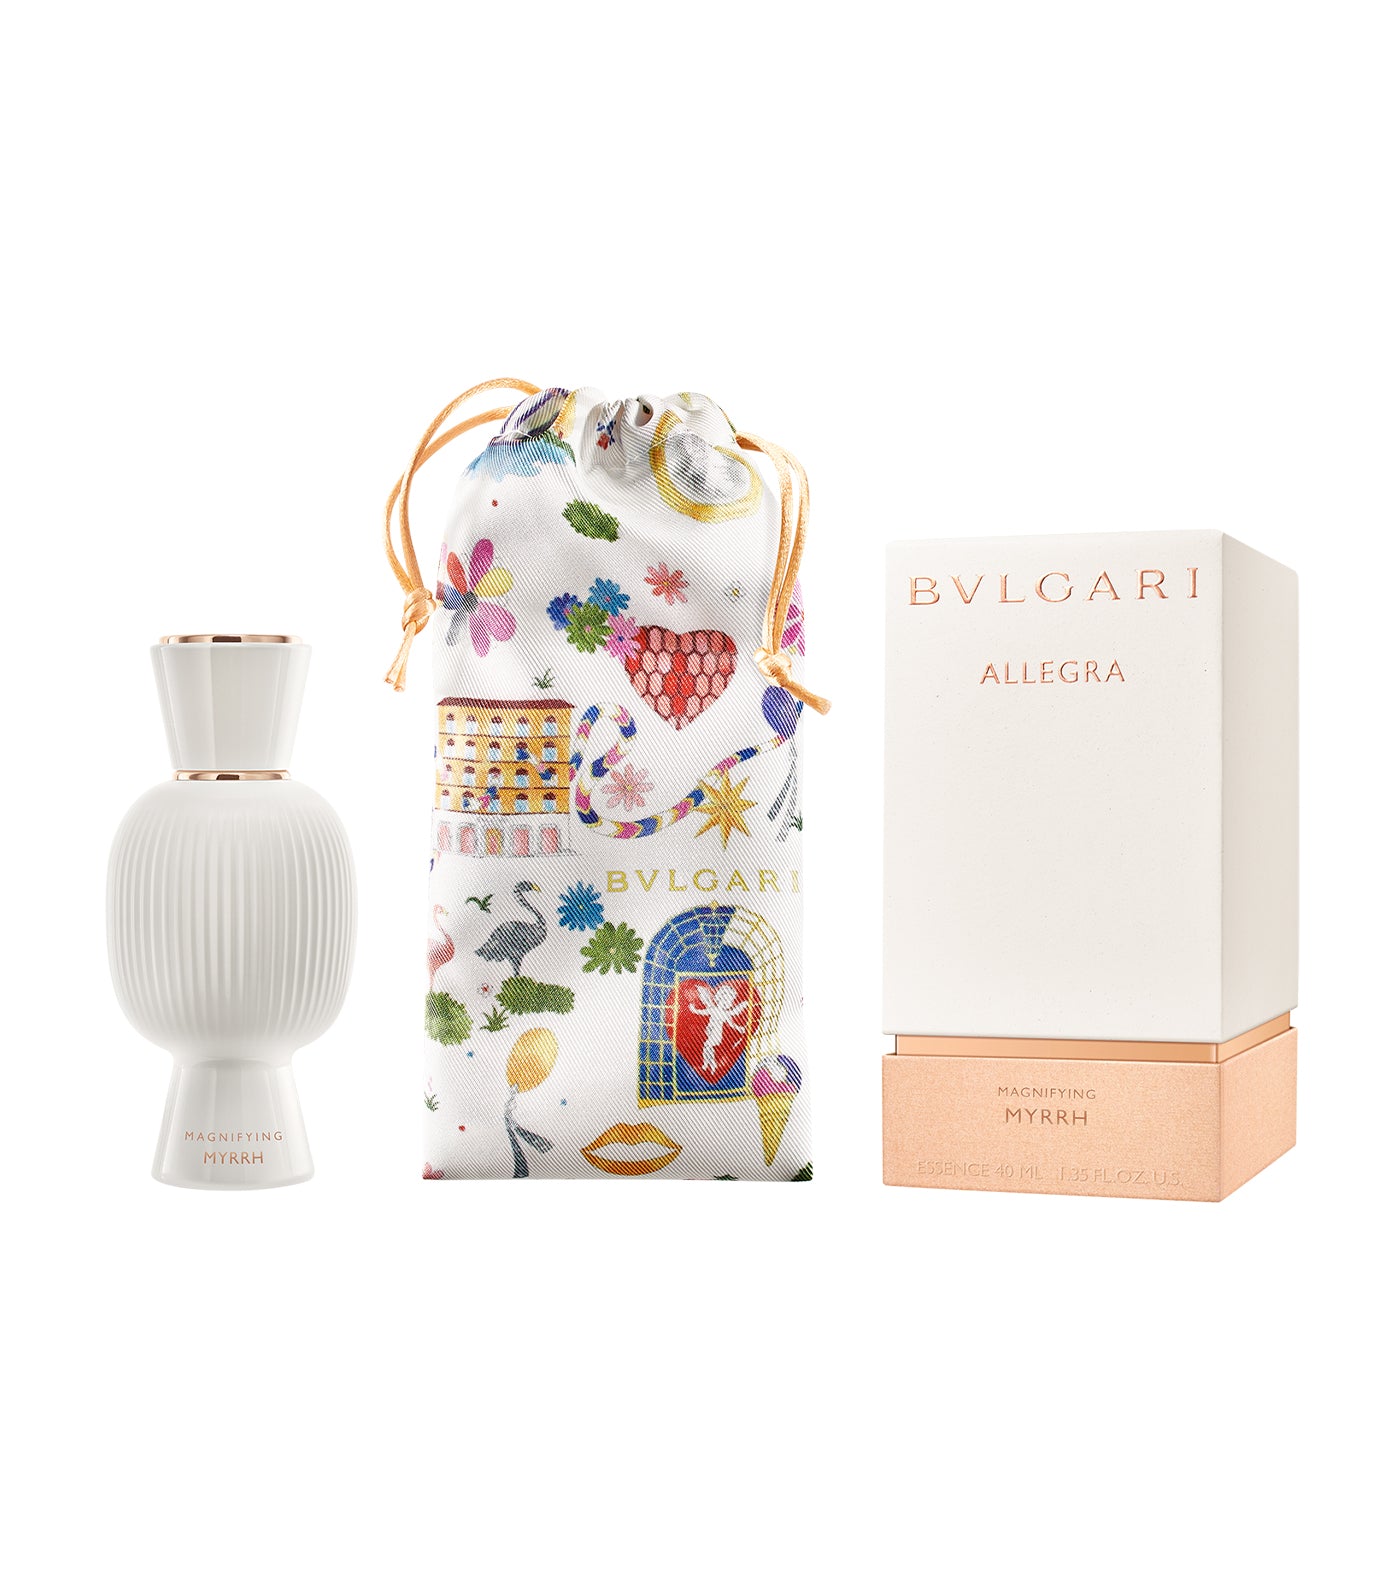 BVLGARI ALLEGRA Magnifying Myrrh Eau De Parfum